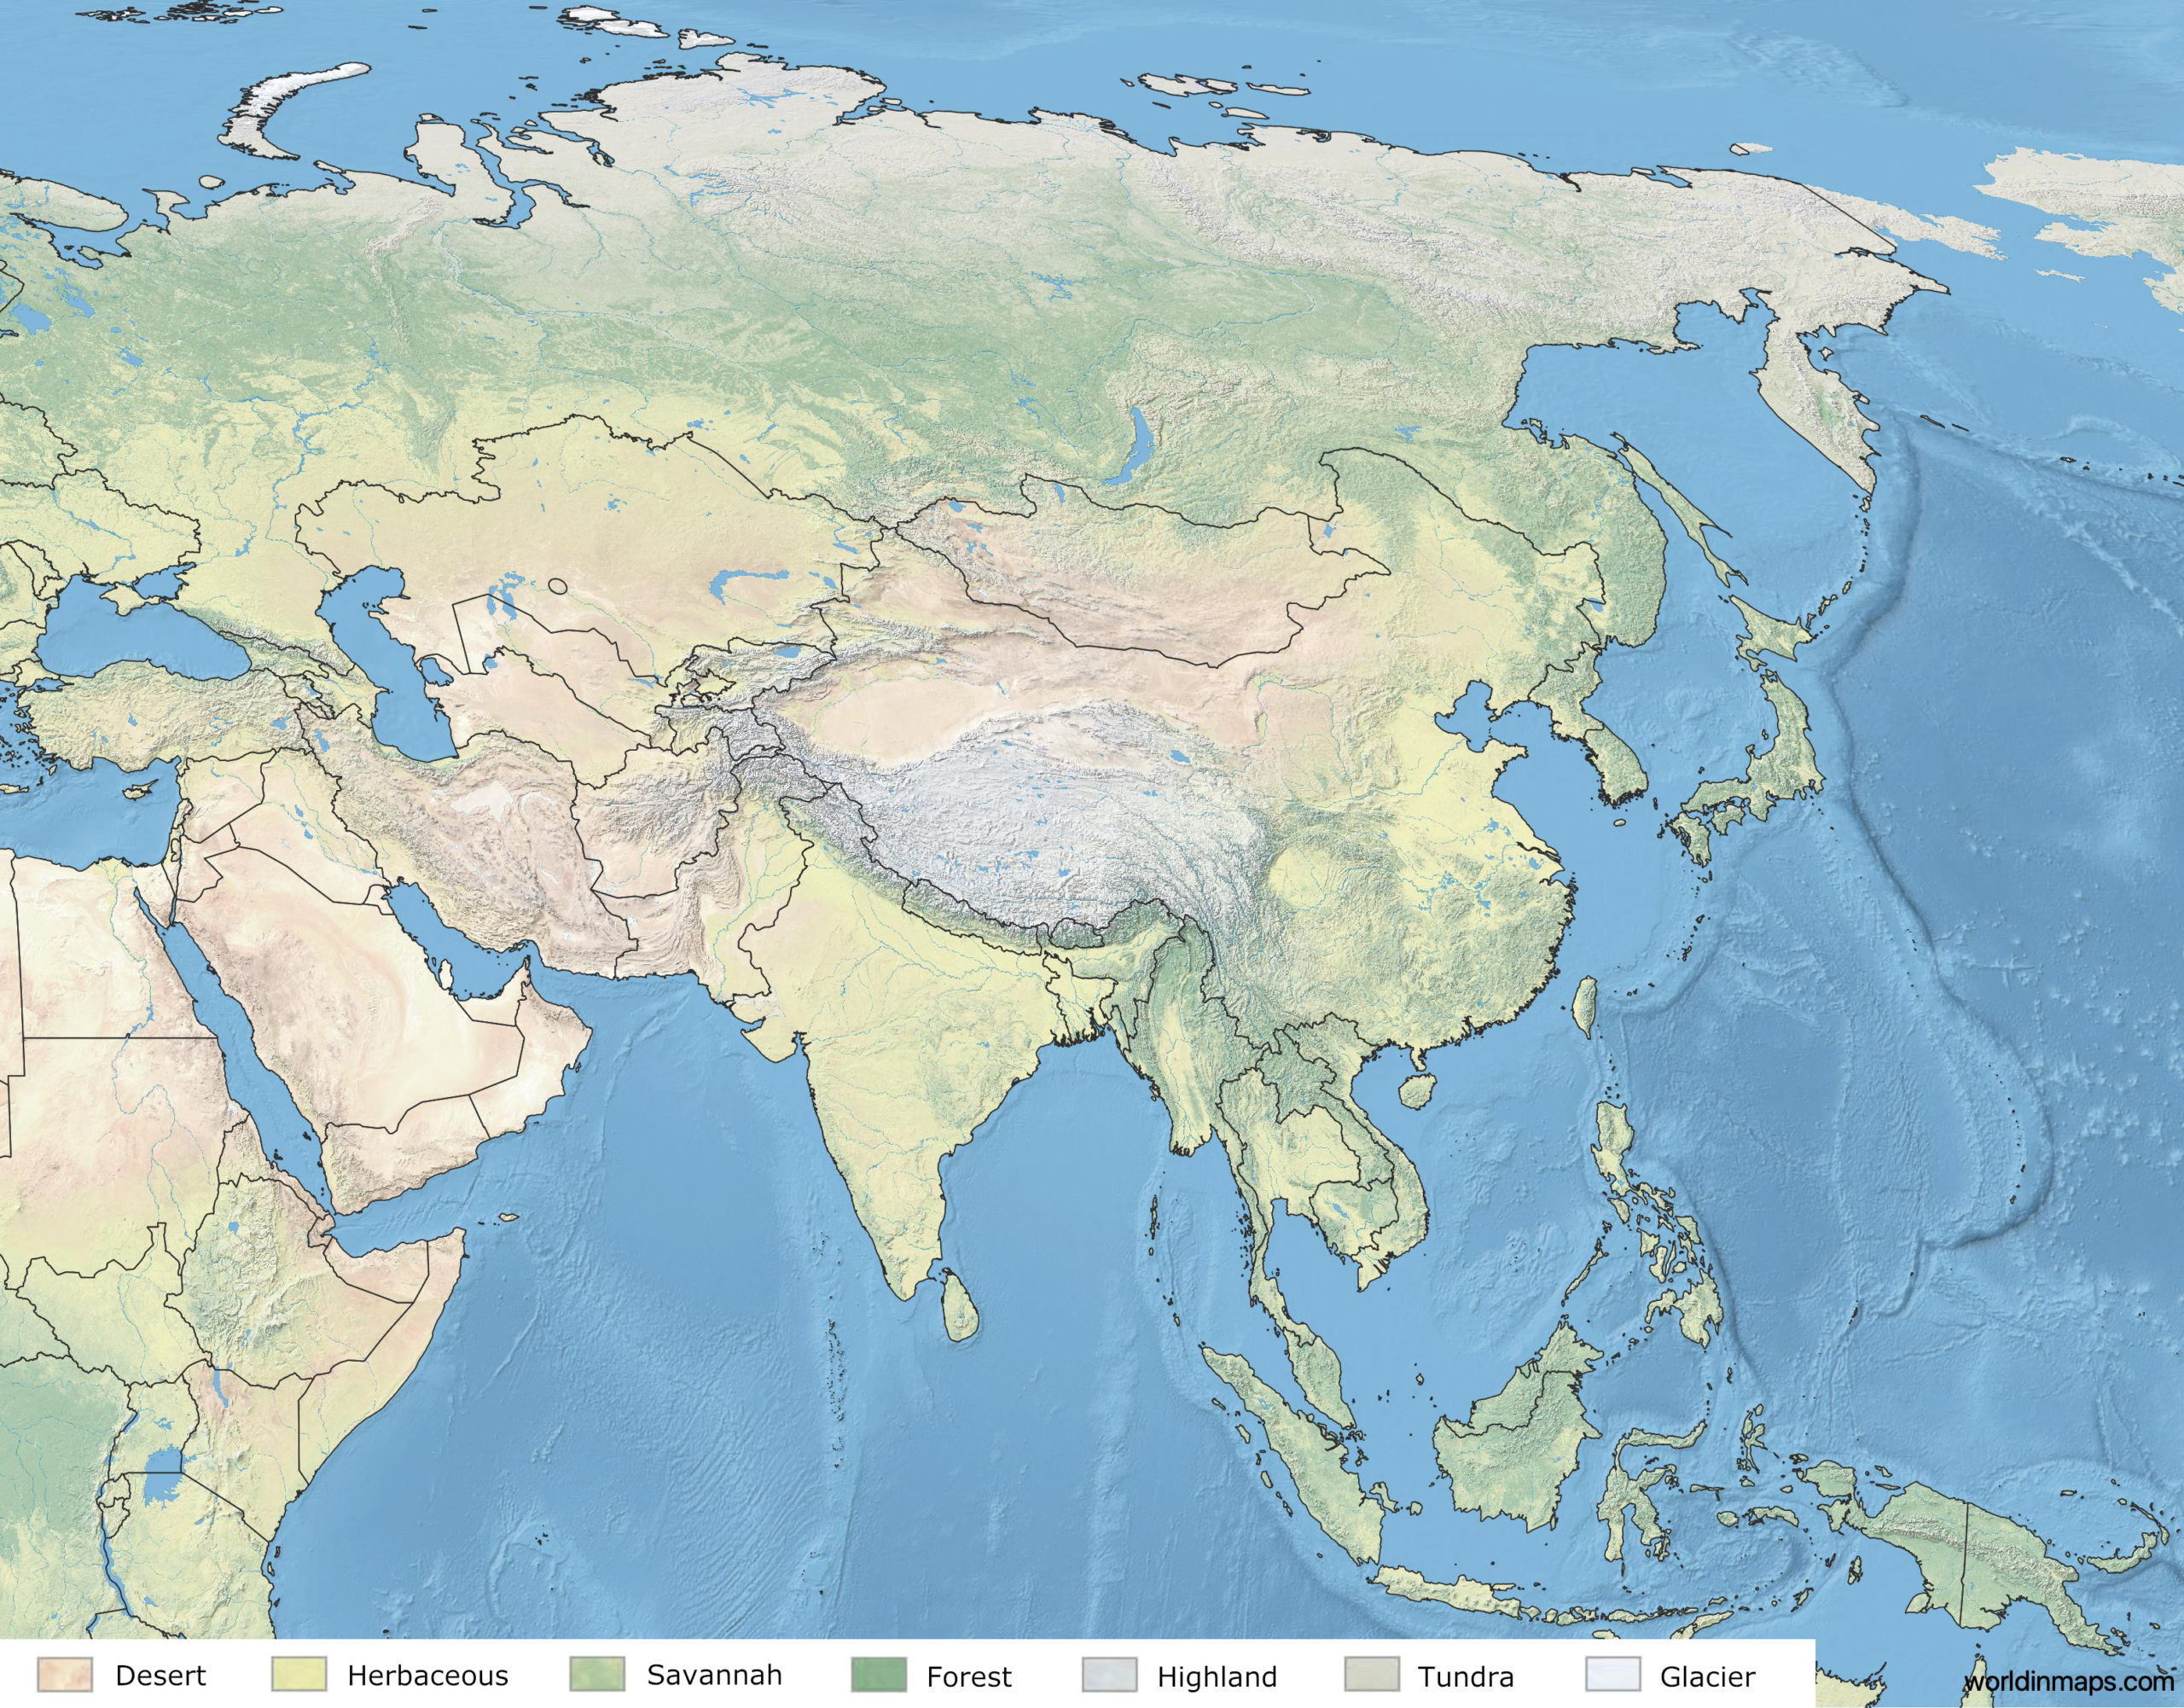 asia world map